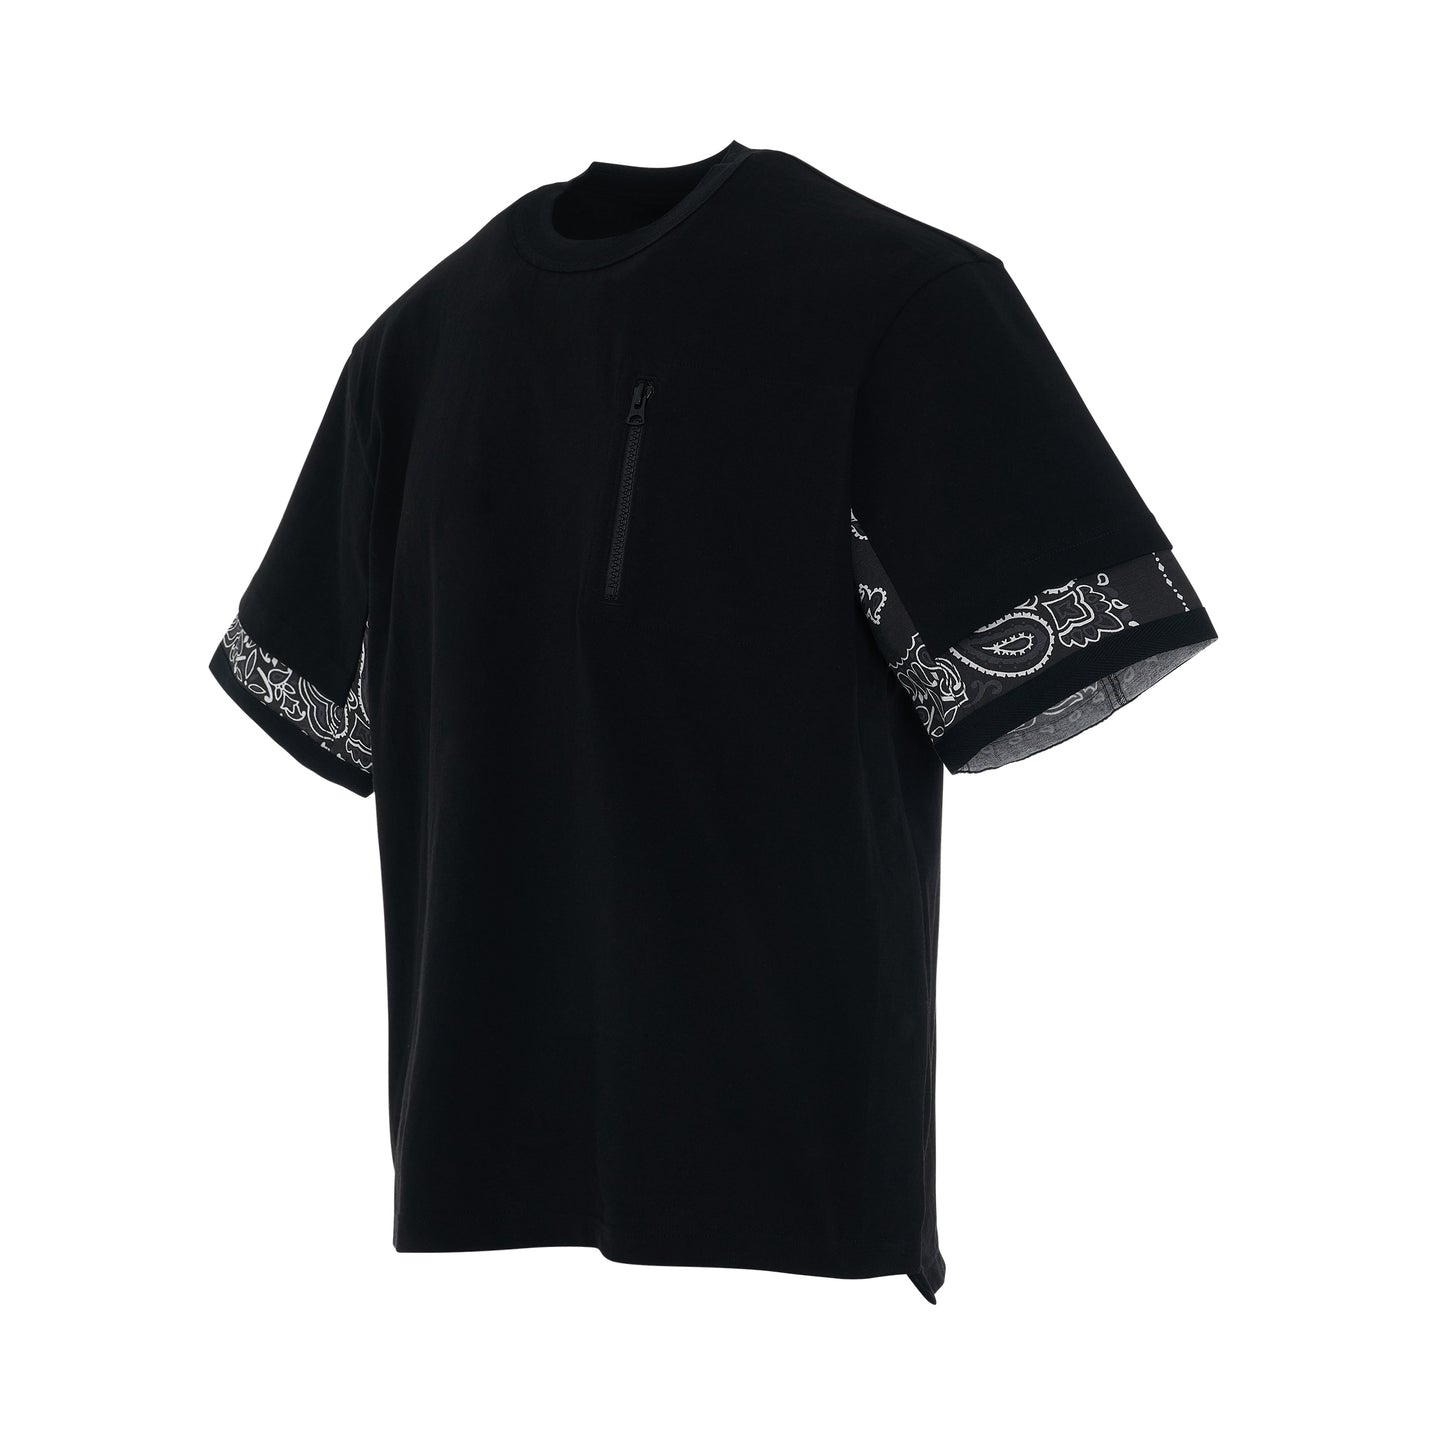 Bandana Print T-Shirt with Pocket in Black